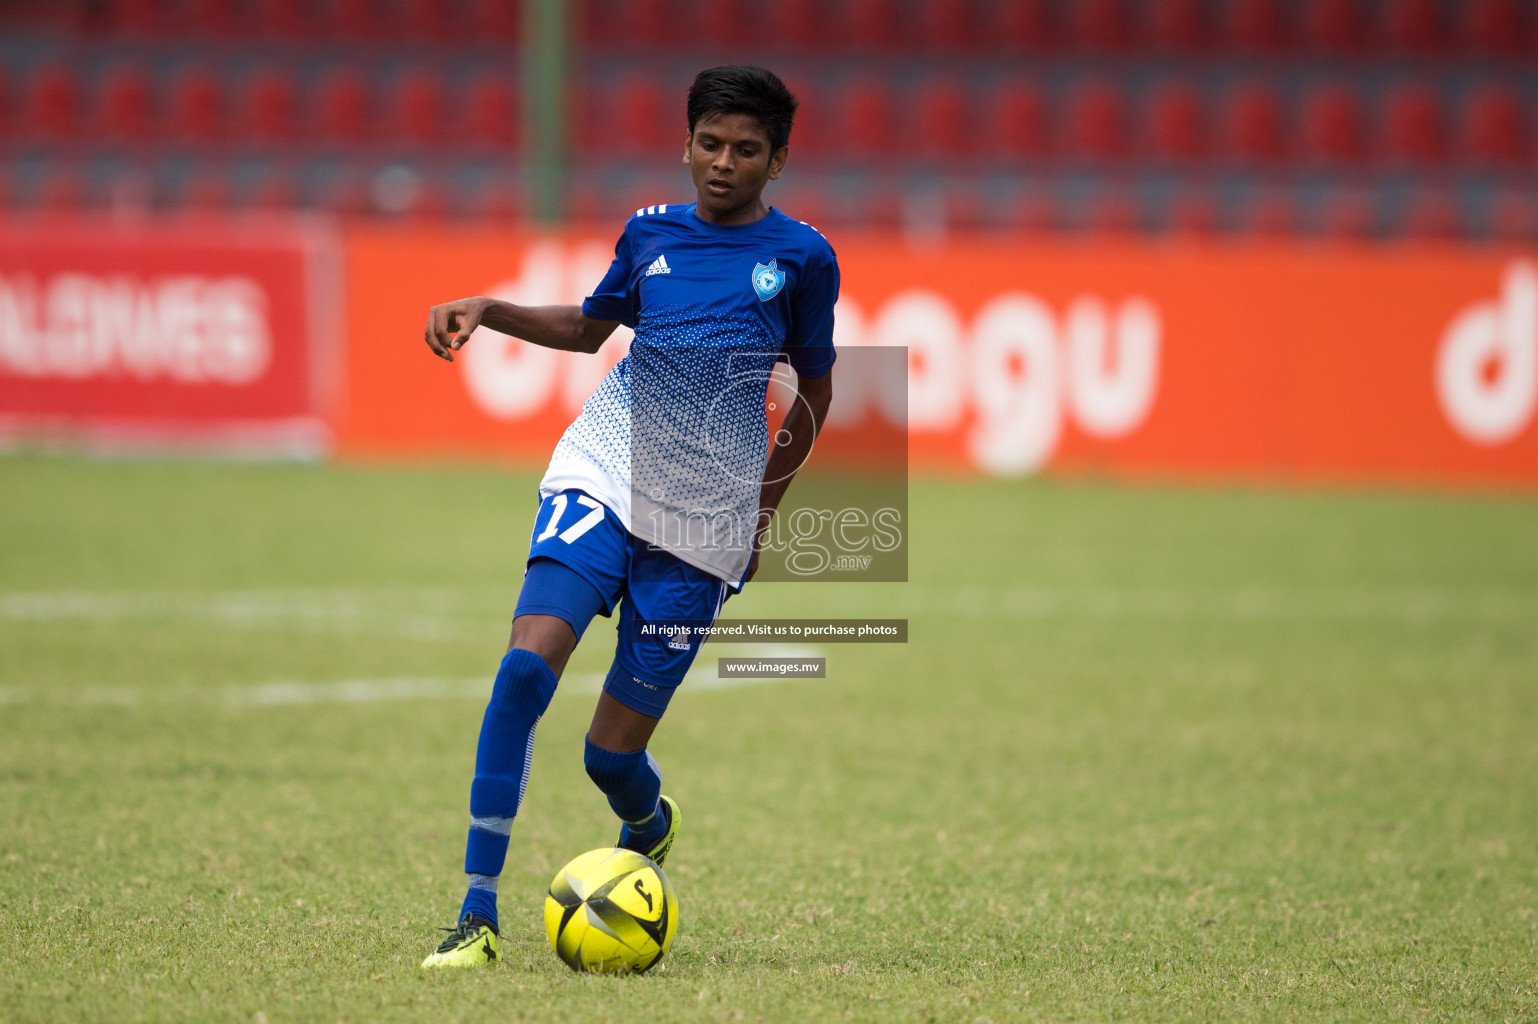 Villa vs Rehendhi in MAMEN Inter School Football Tournament 2019 (U18) in Male, Maldives on 20th March 2019, Photos: Suadh Abdul Sattar / images.mv